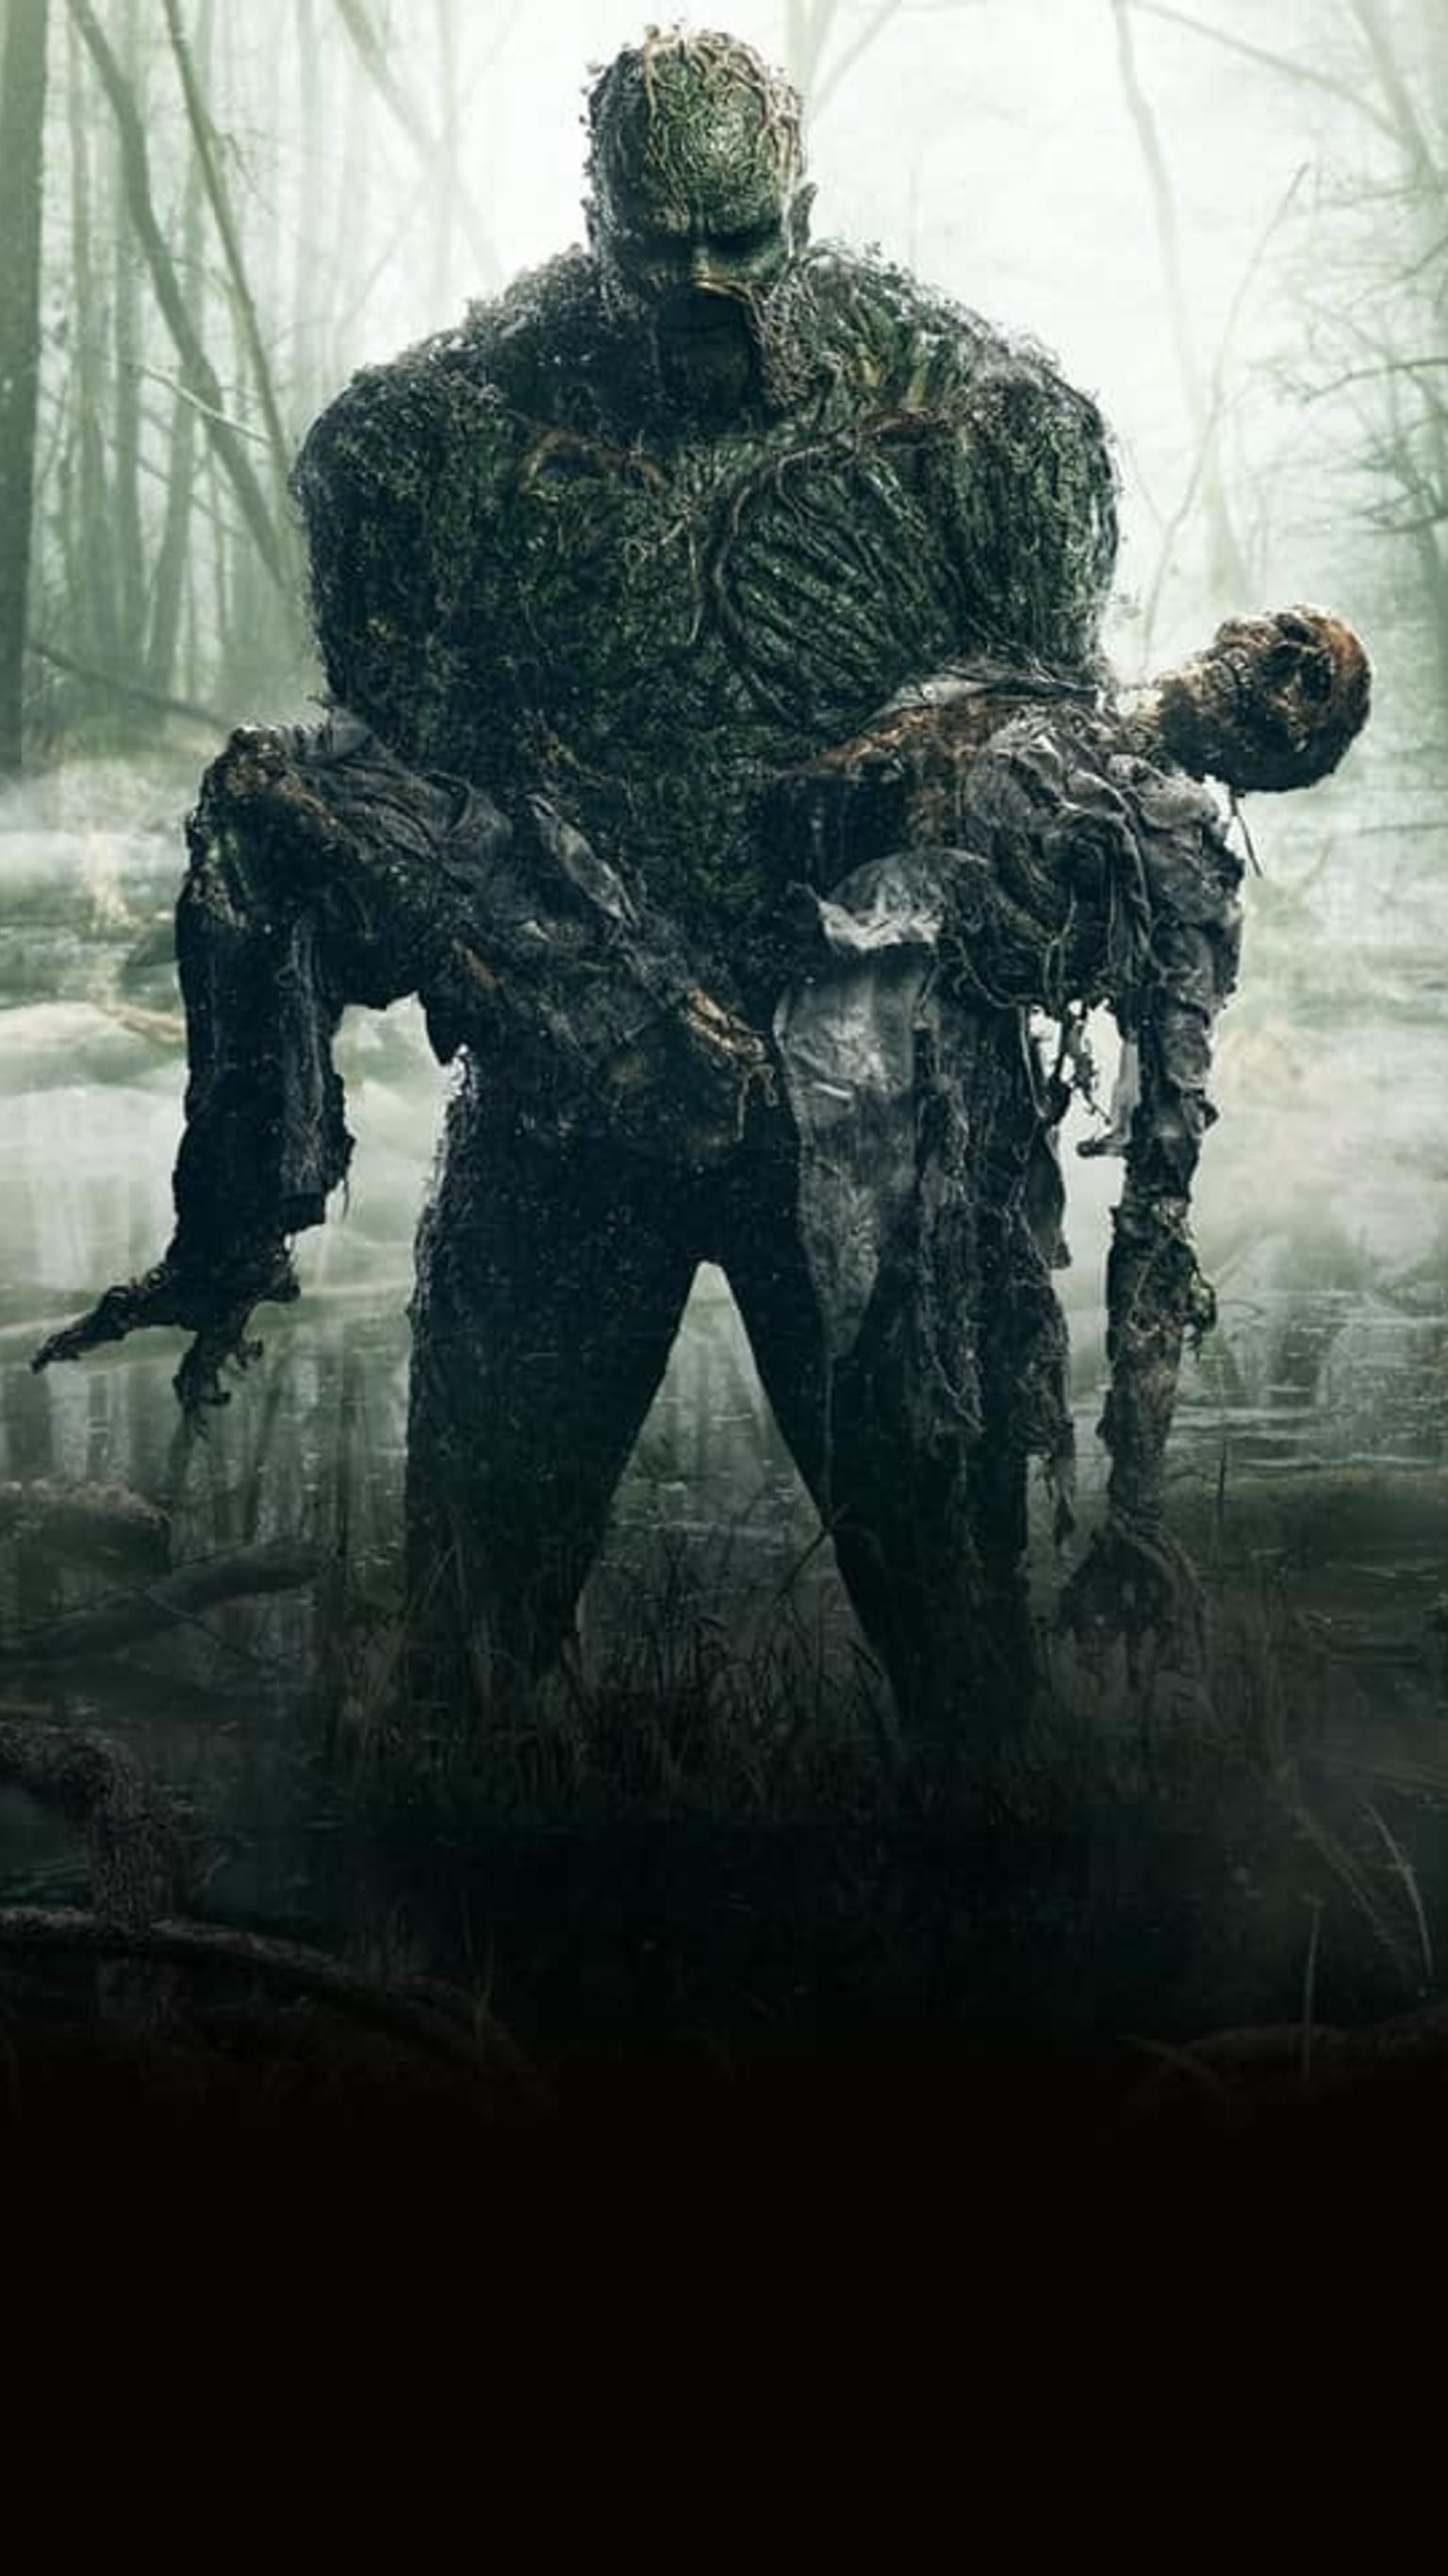 Swamp Thing Phone Wallpaper. Moviemania. Dc universe, Swamp thing movie, Swamp